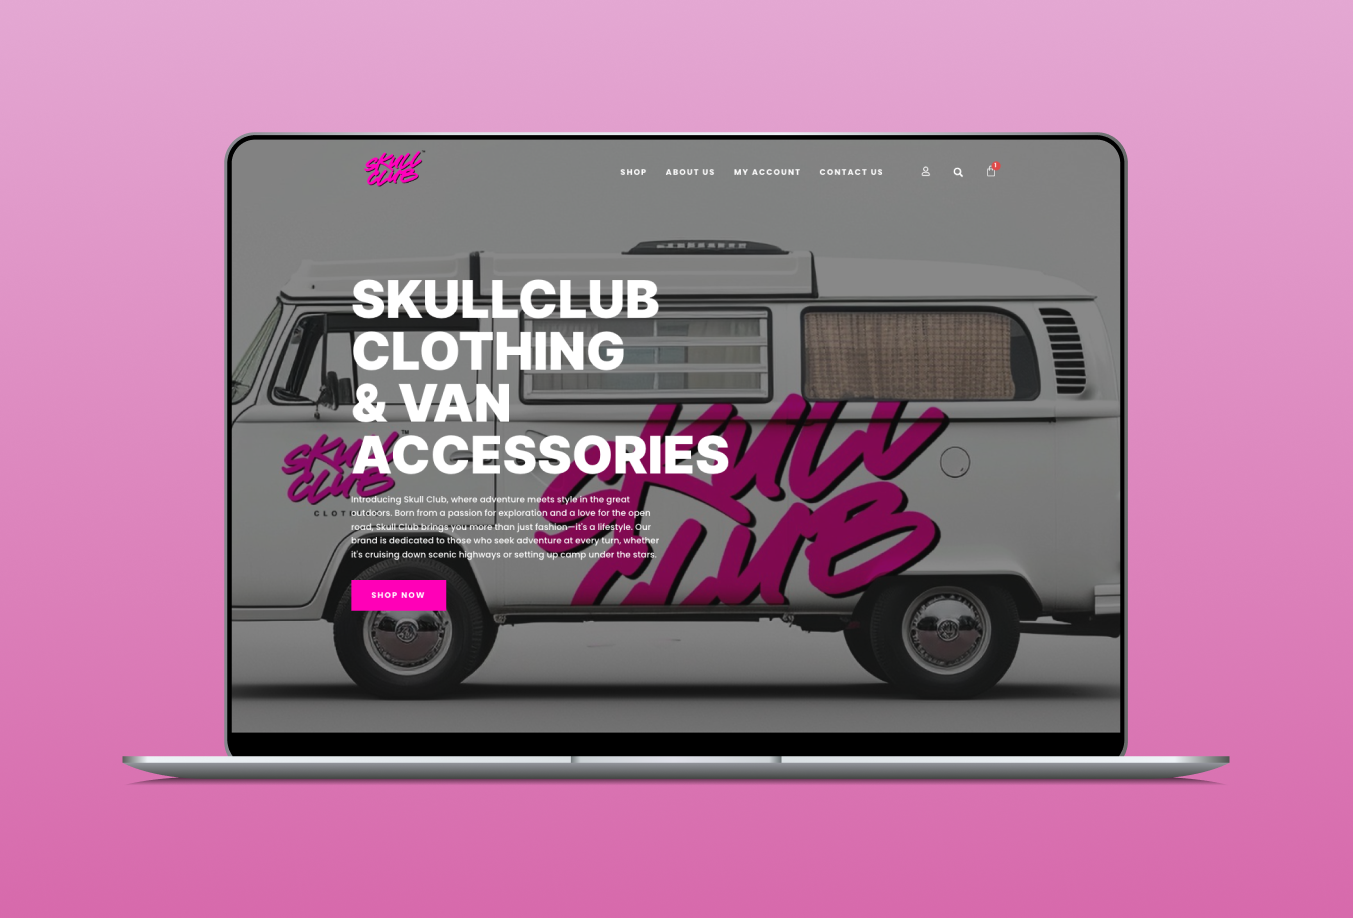 A screenshot of the skullclub website.